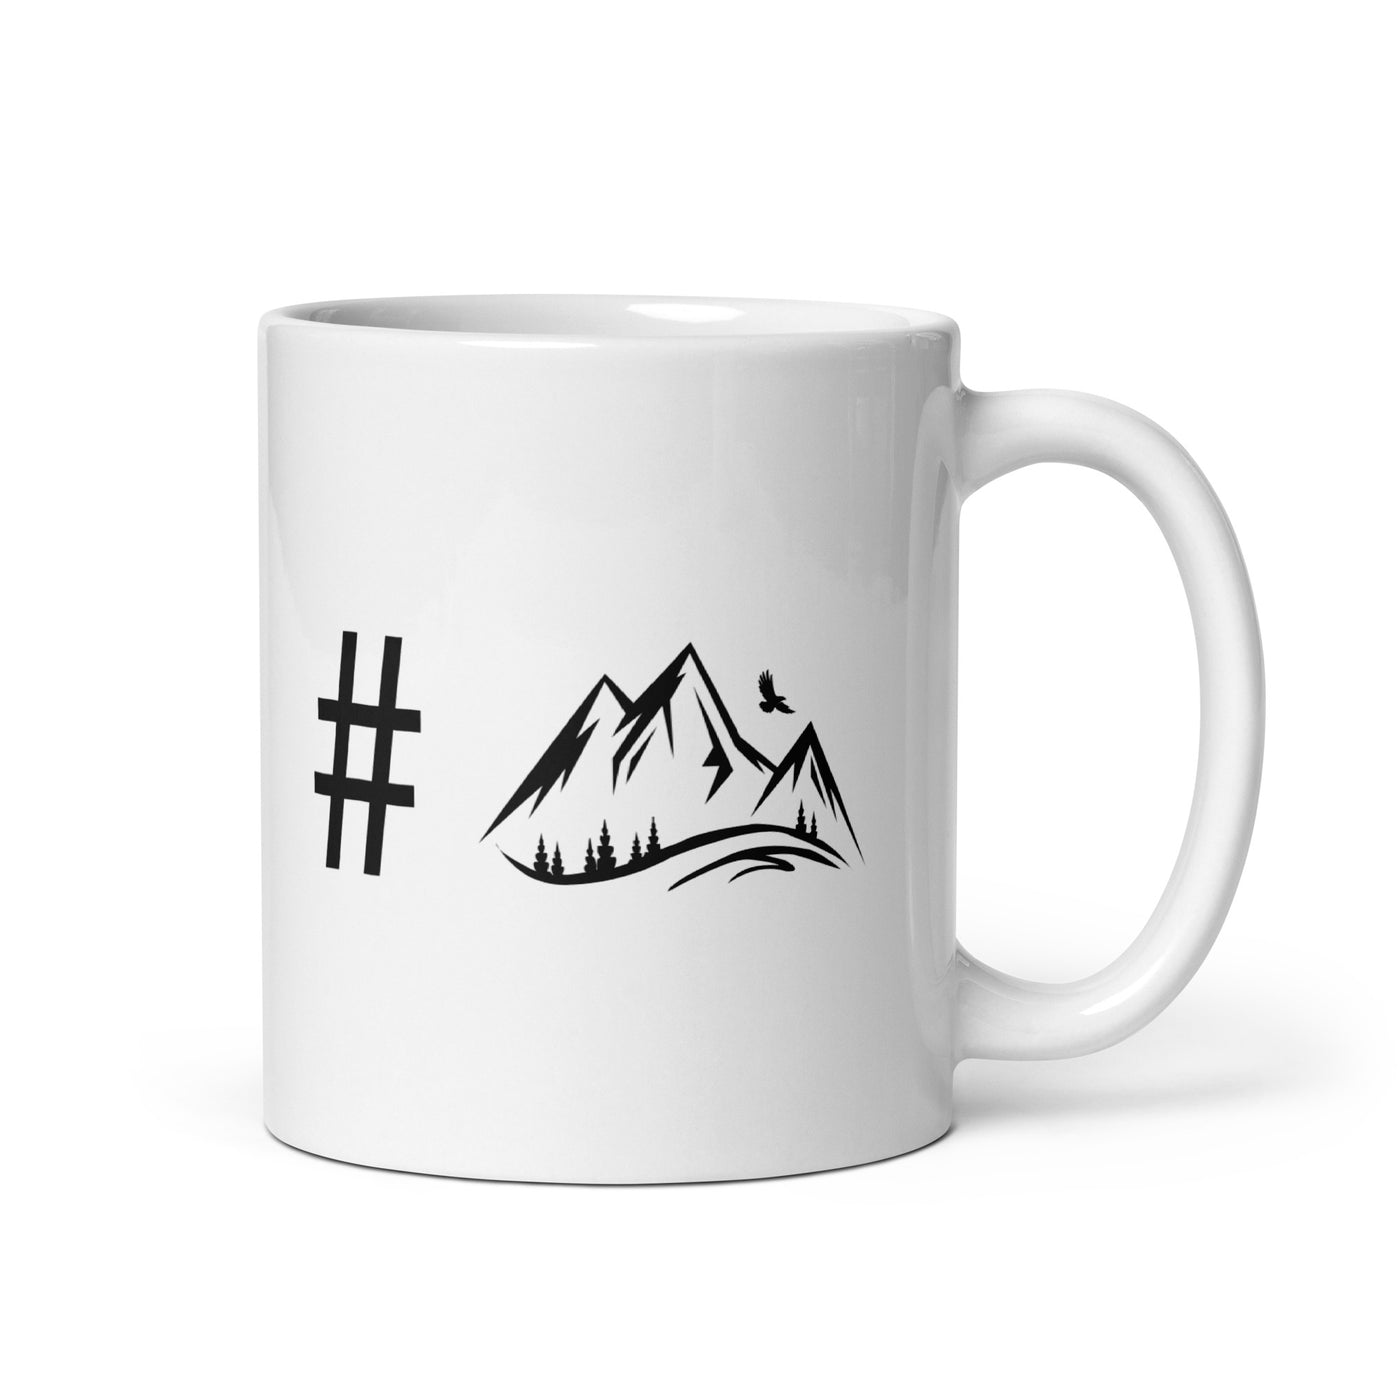 Hashtag - Mountain - Tasse berge